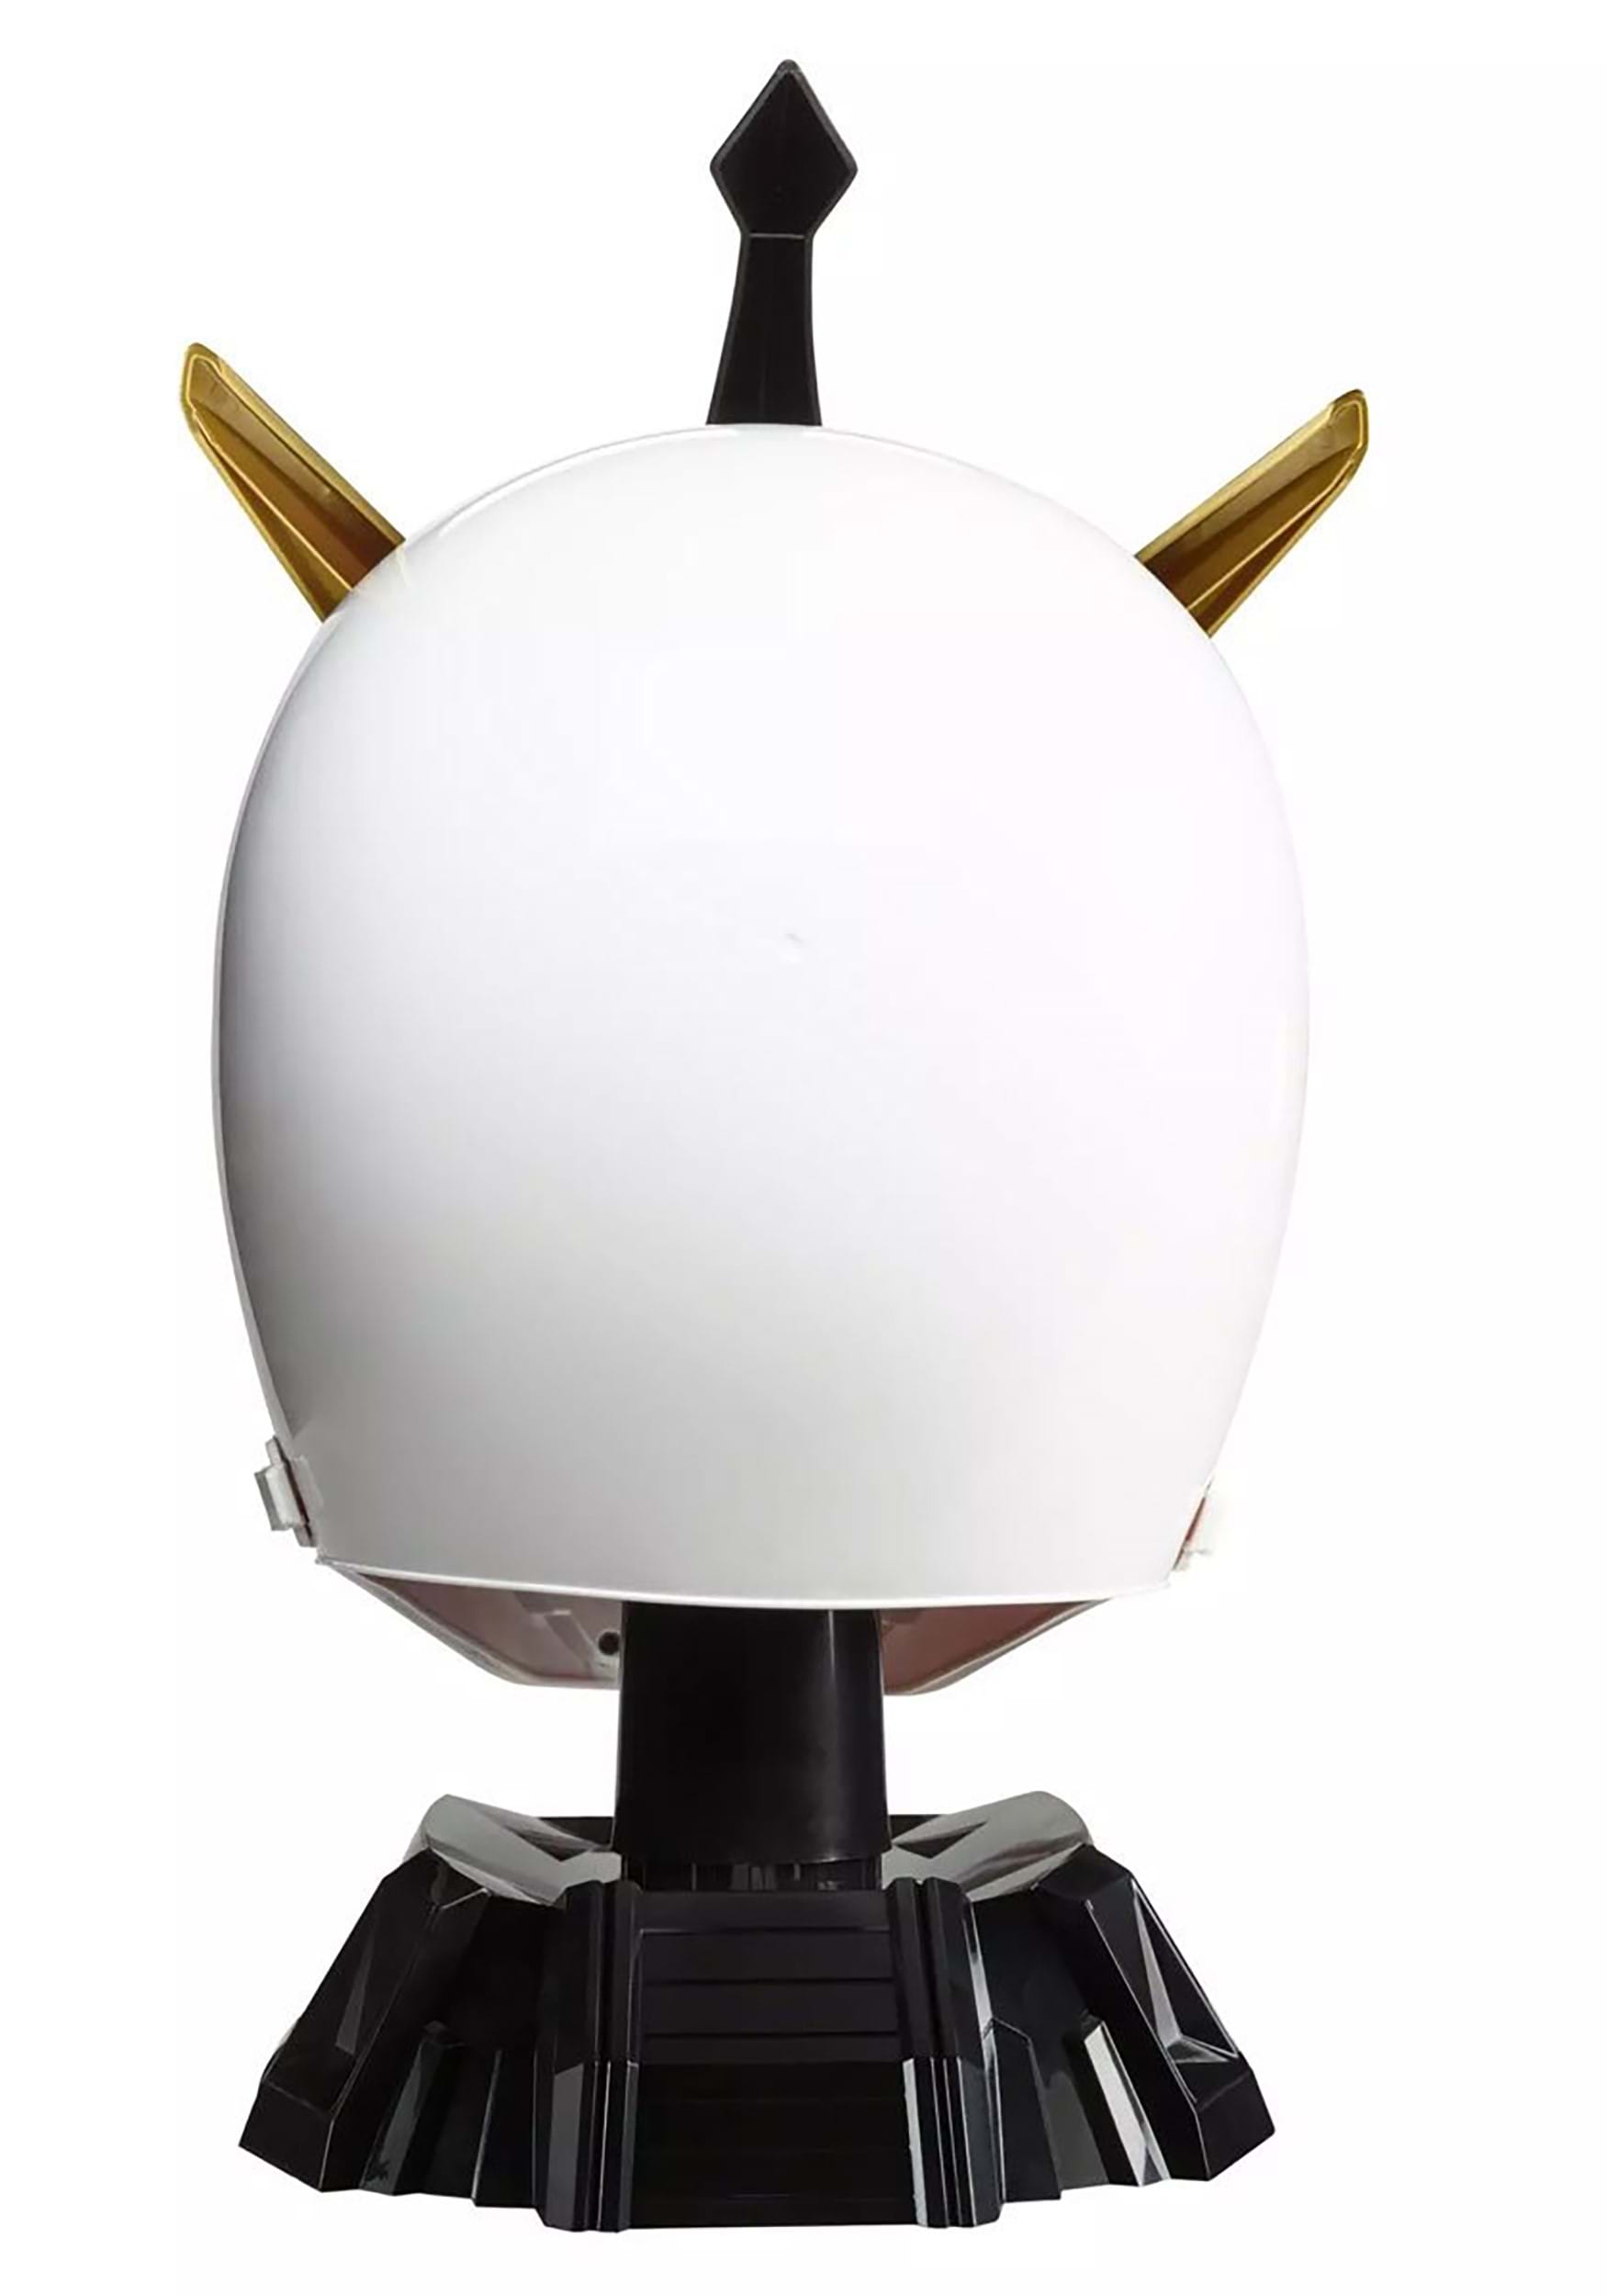 Power Rangers Lightning Collection Lord Drakkon Collectible Helmet